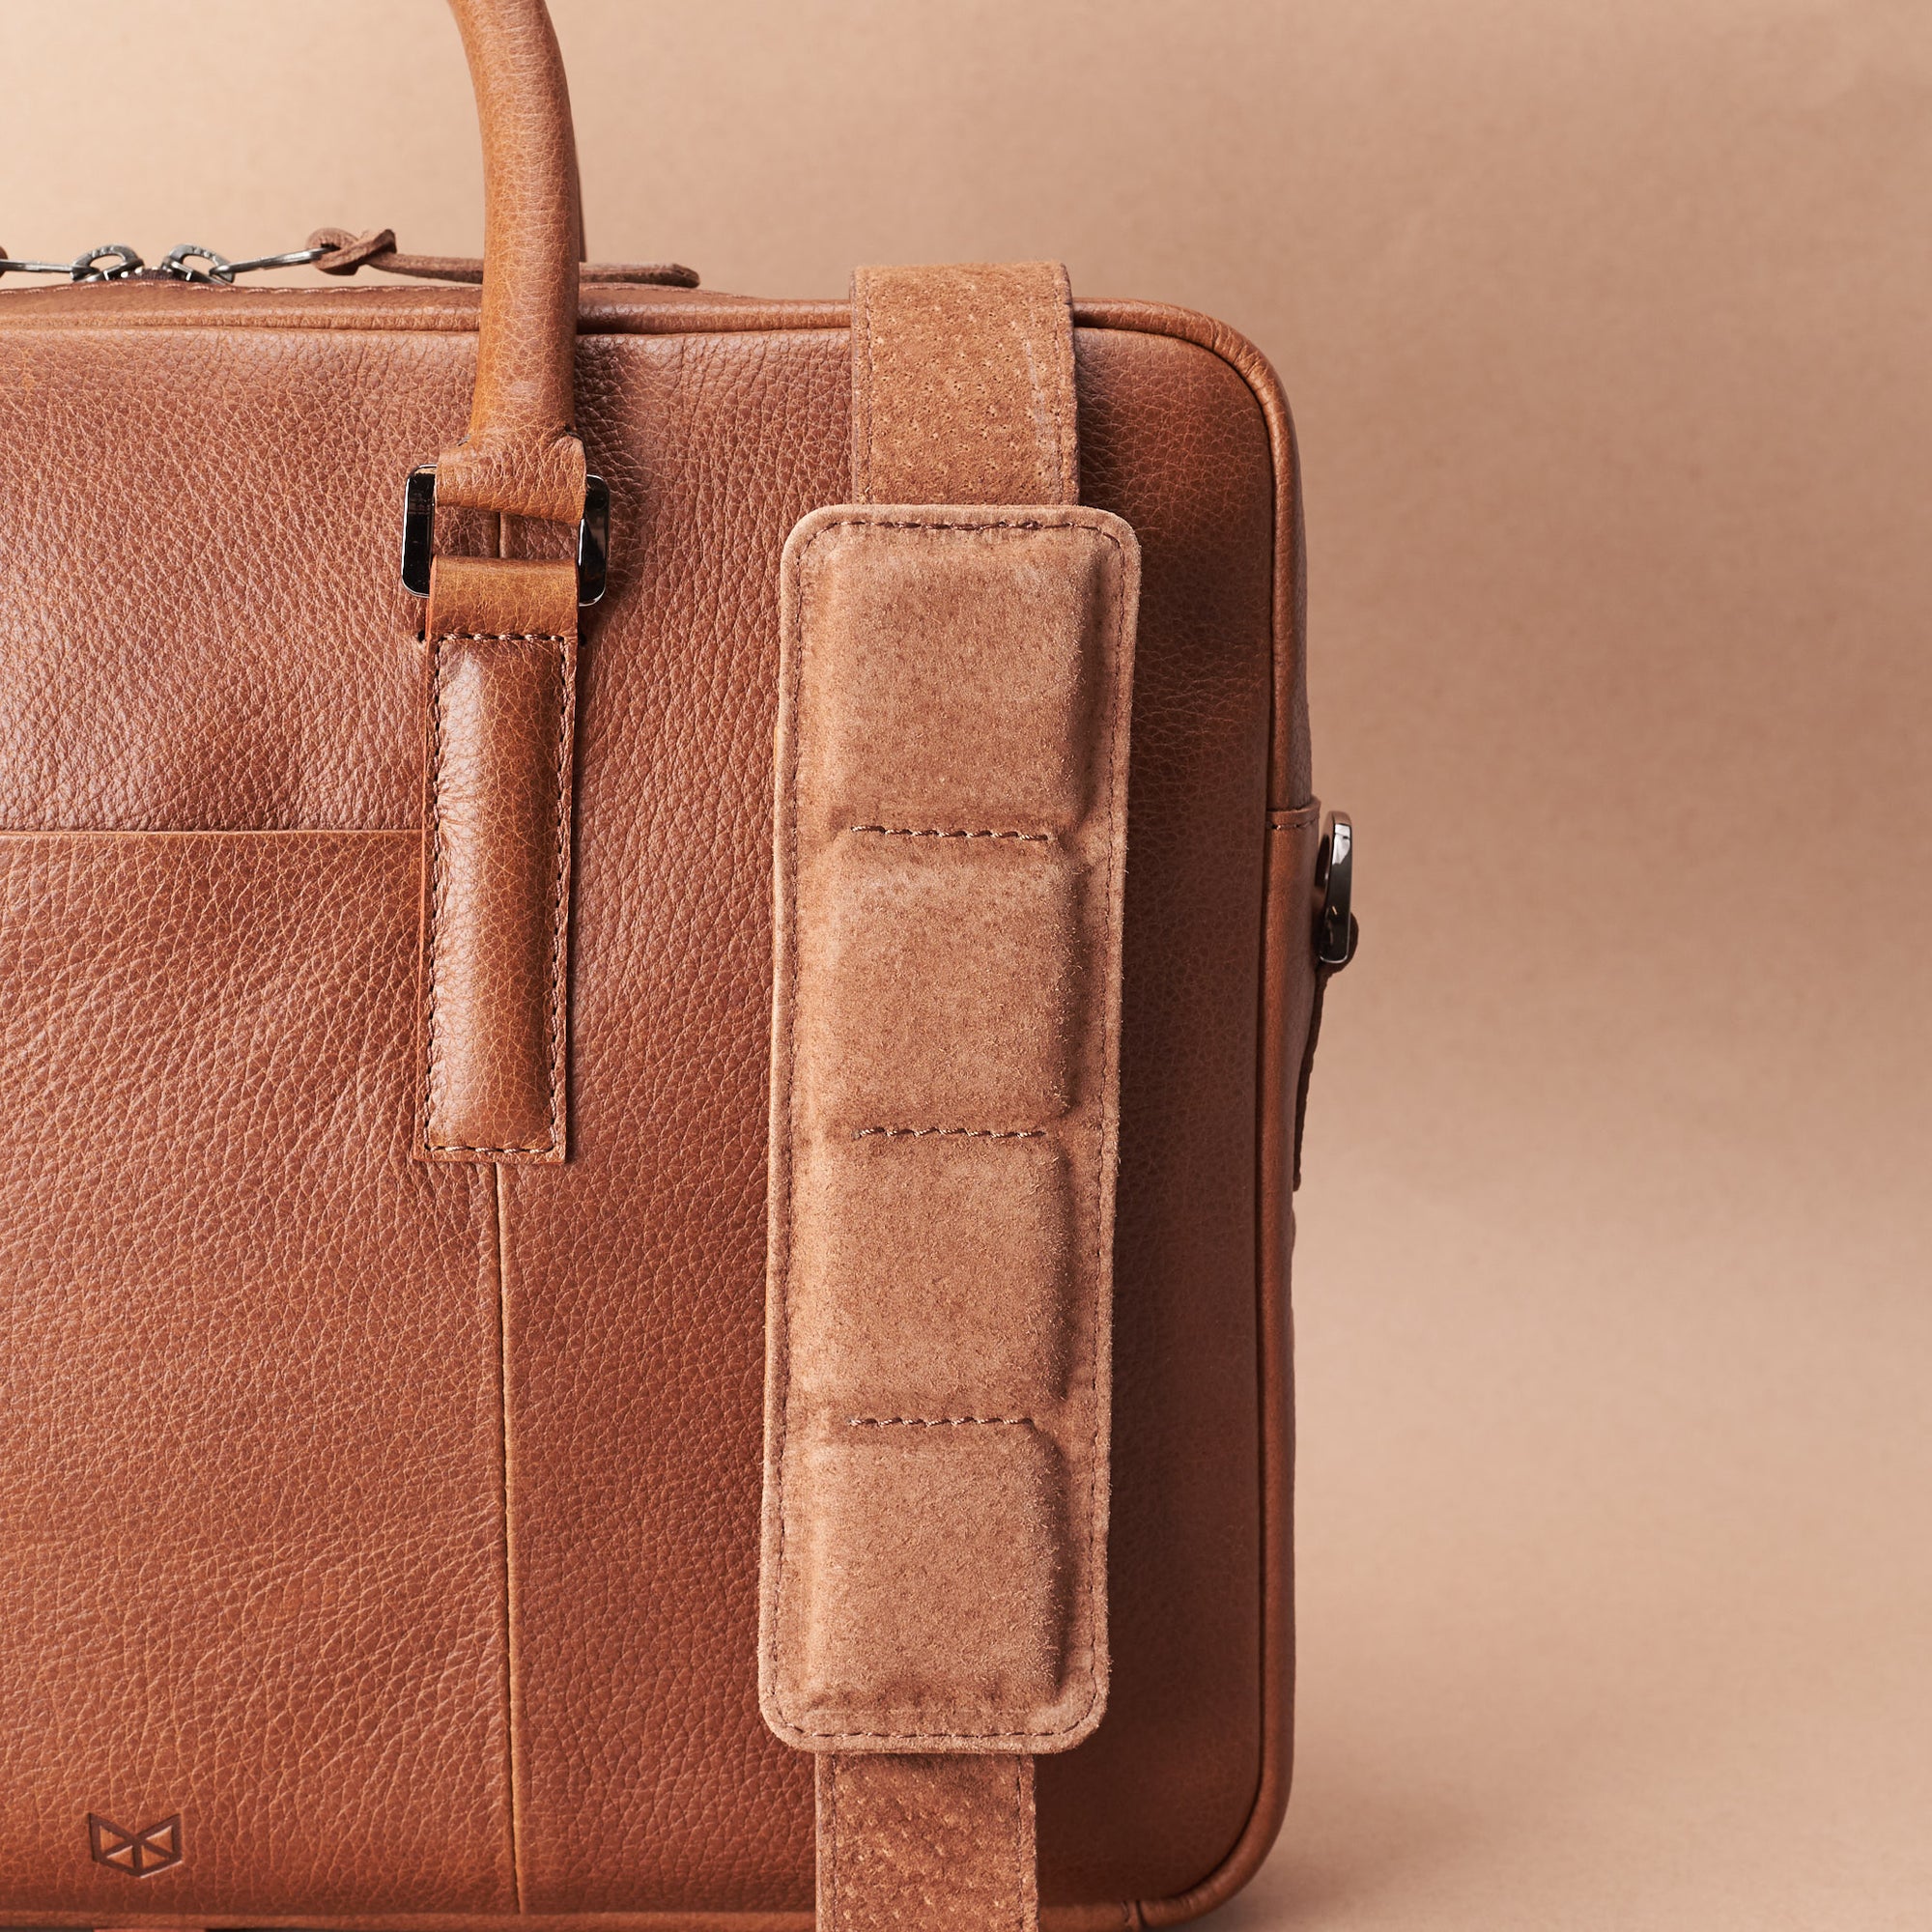 Detail of strap of shoulder bag. Tan leather briefcase laptop bag for men. Gazeli laptop briefcase by Capra Leather.